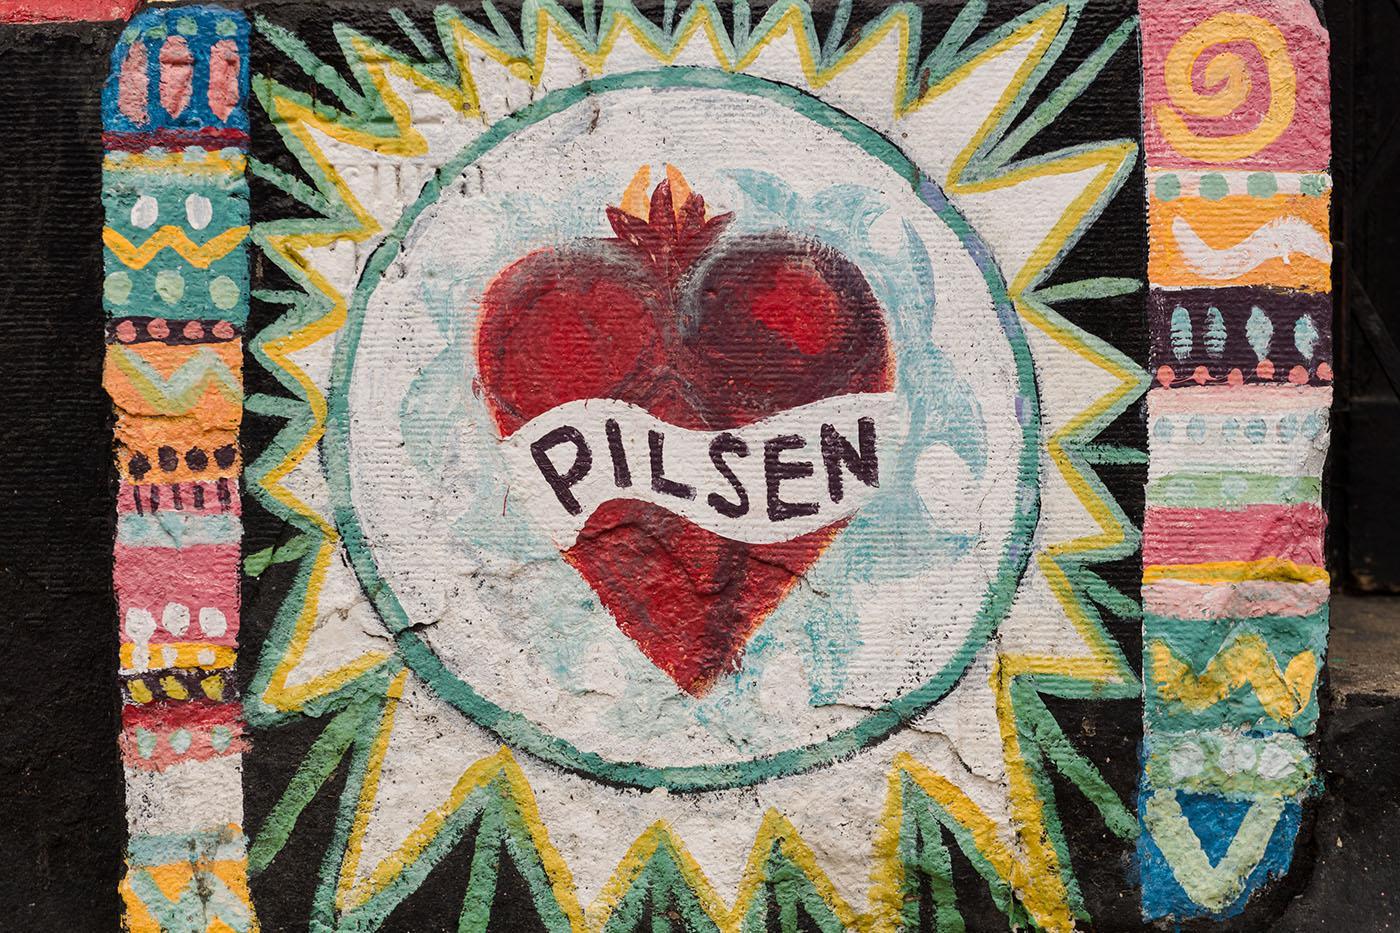 A mural in Pilsen. Photo: Ken Carl for WTTW 